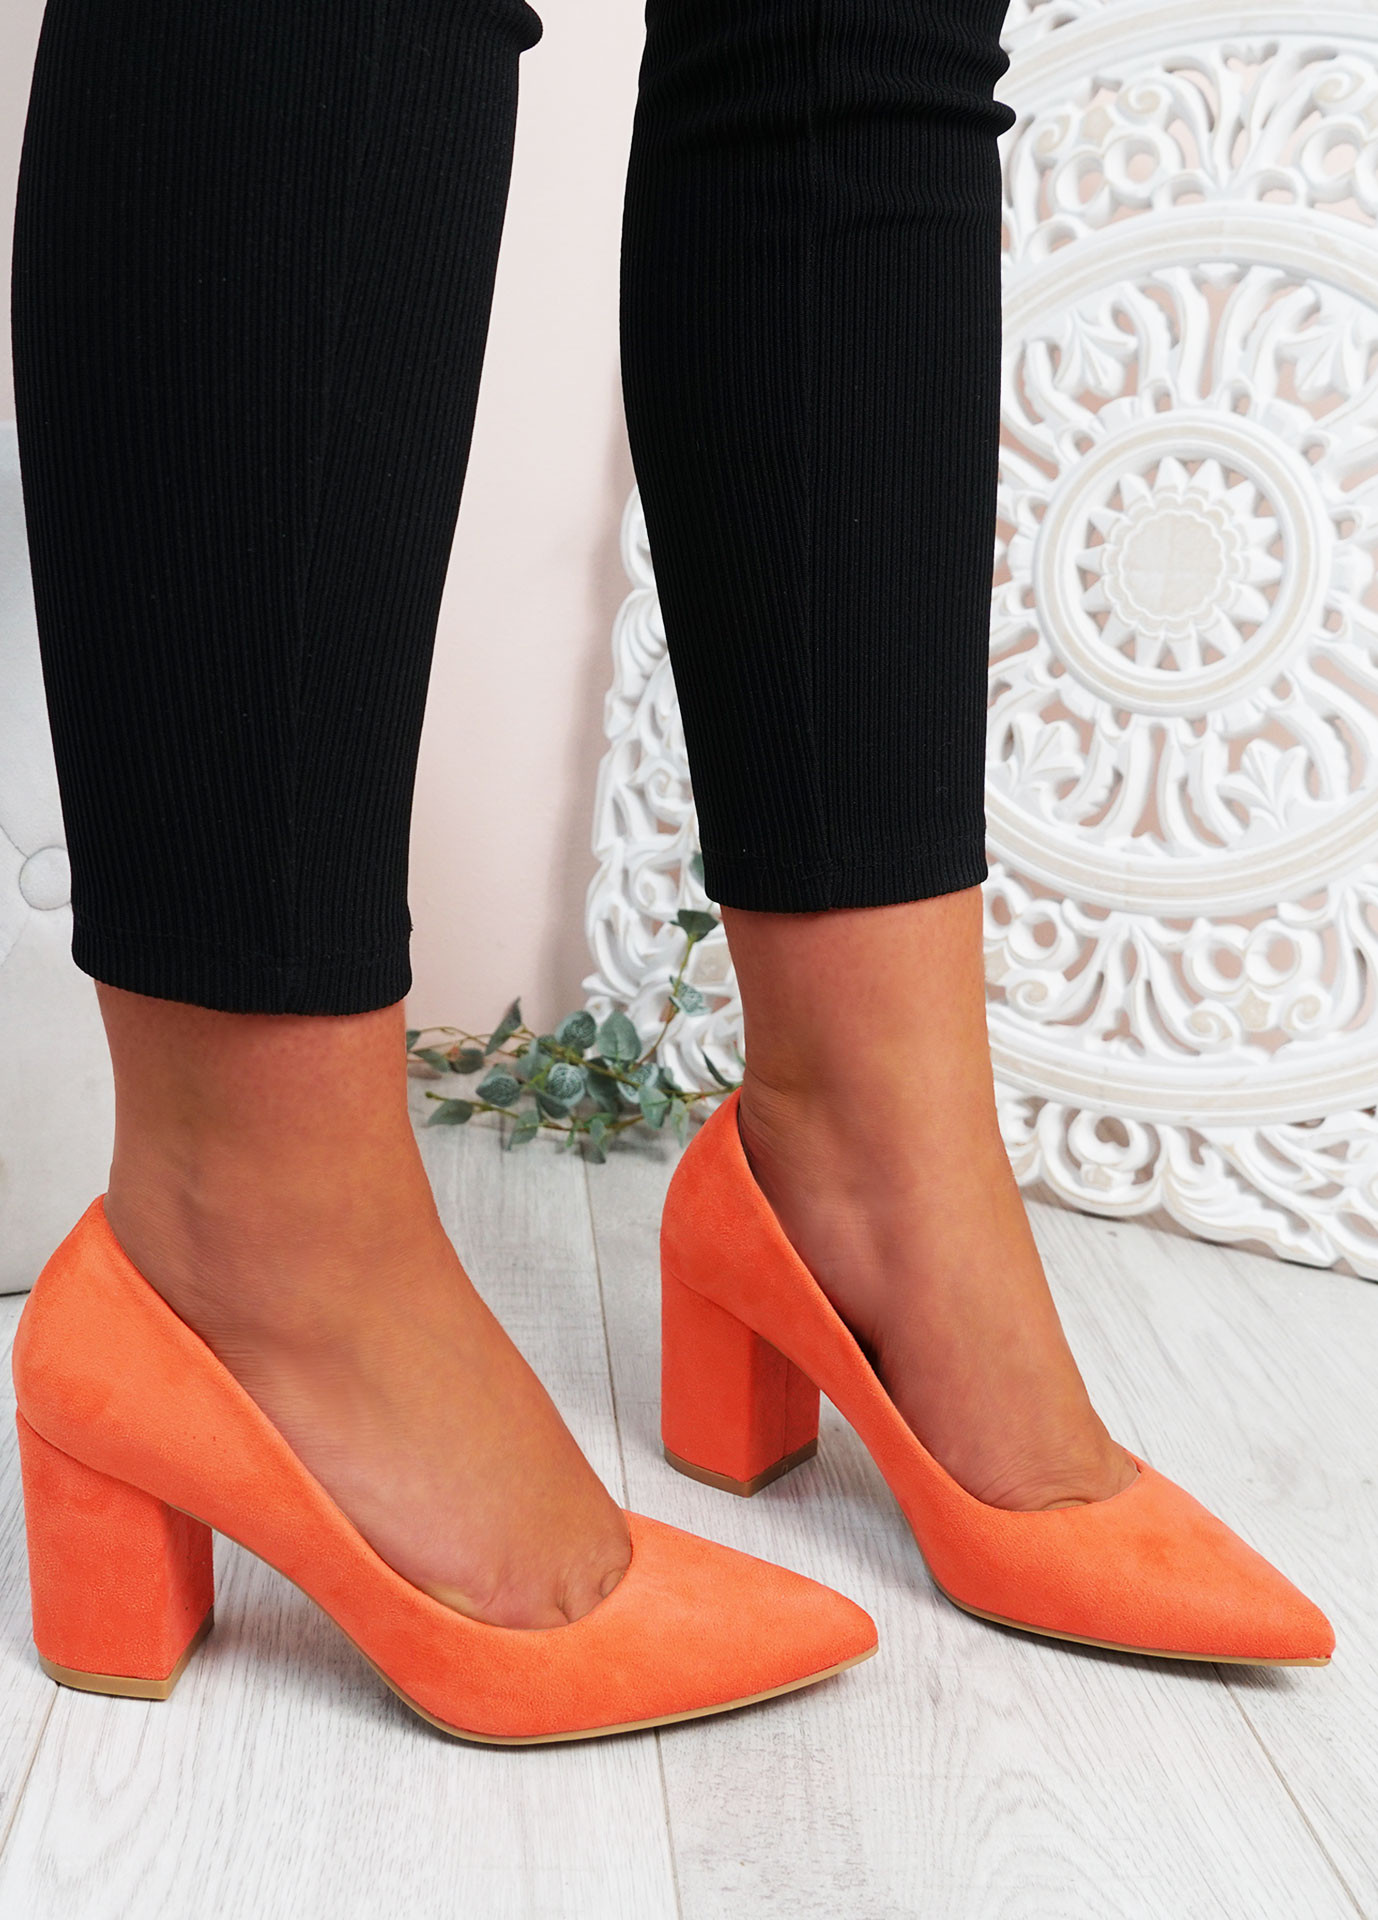 Neon orange heels | Neon shoes, Orange strappy heels, Orange shoes